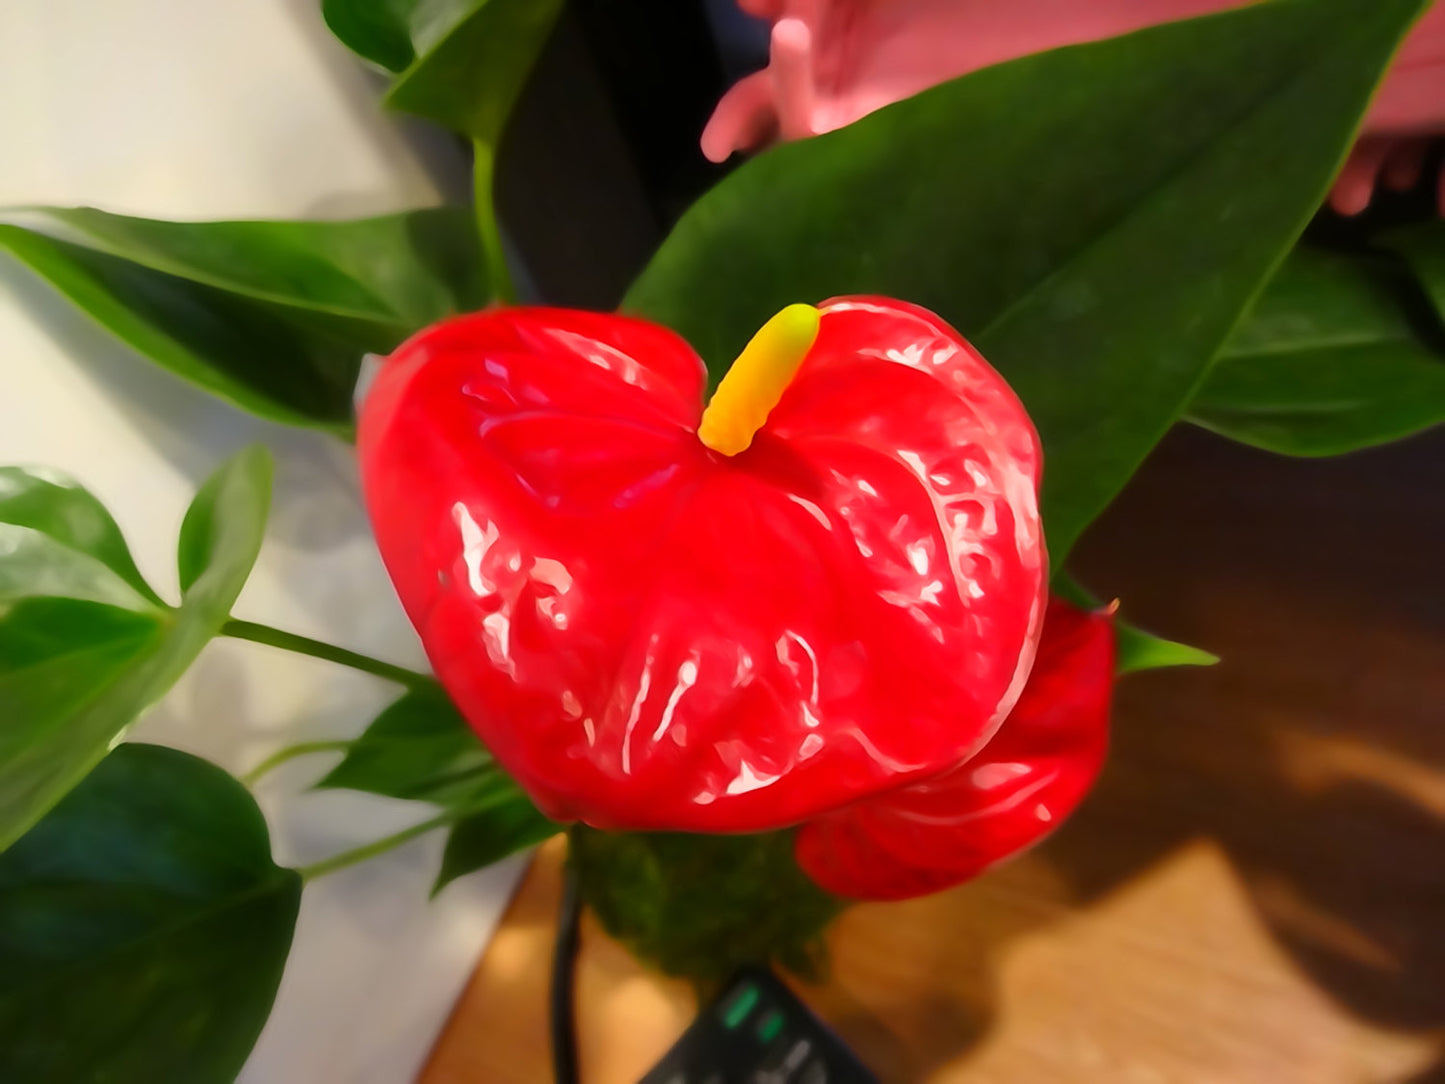 Red Anthrium Kokedama - Bonsai Moss Ball, anthrium, vivid red color, heart shape flower